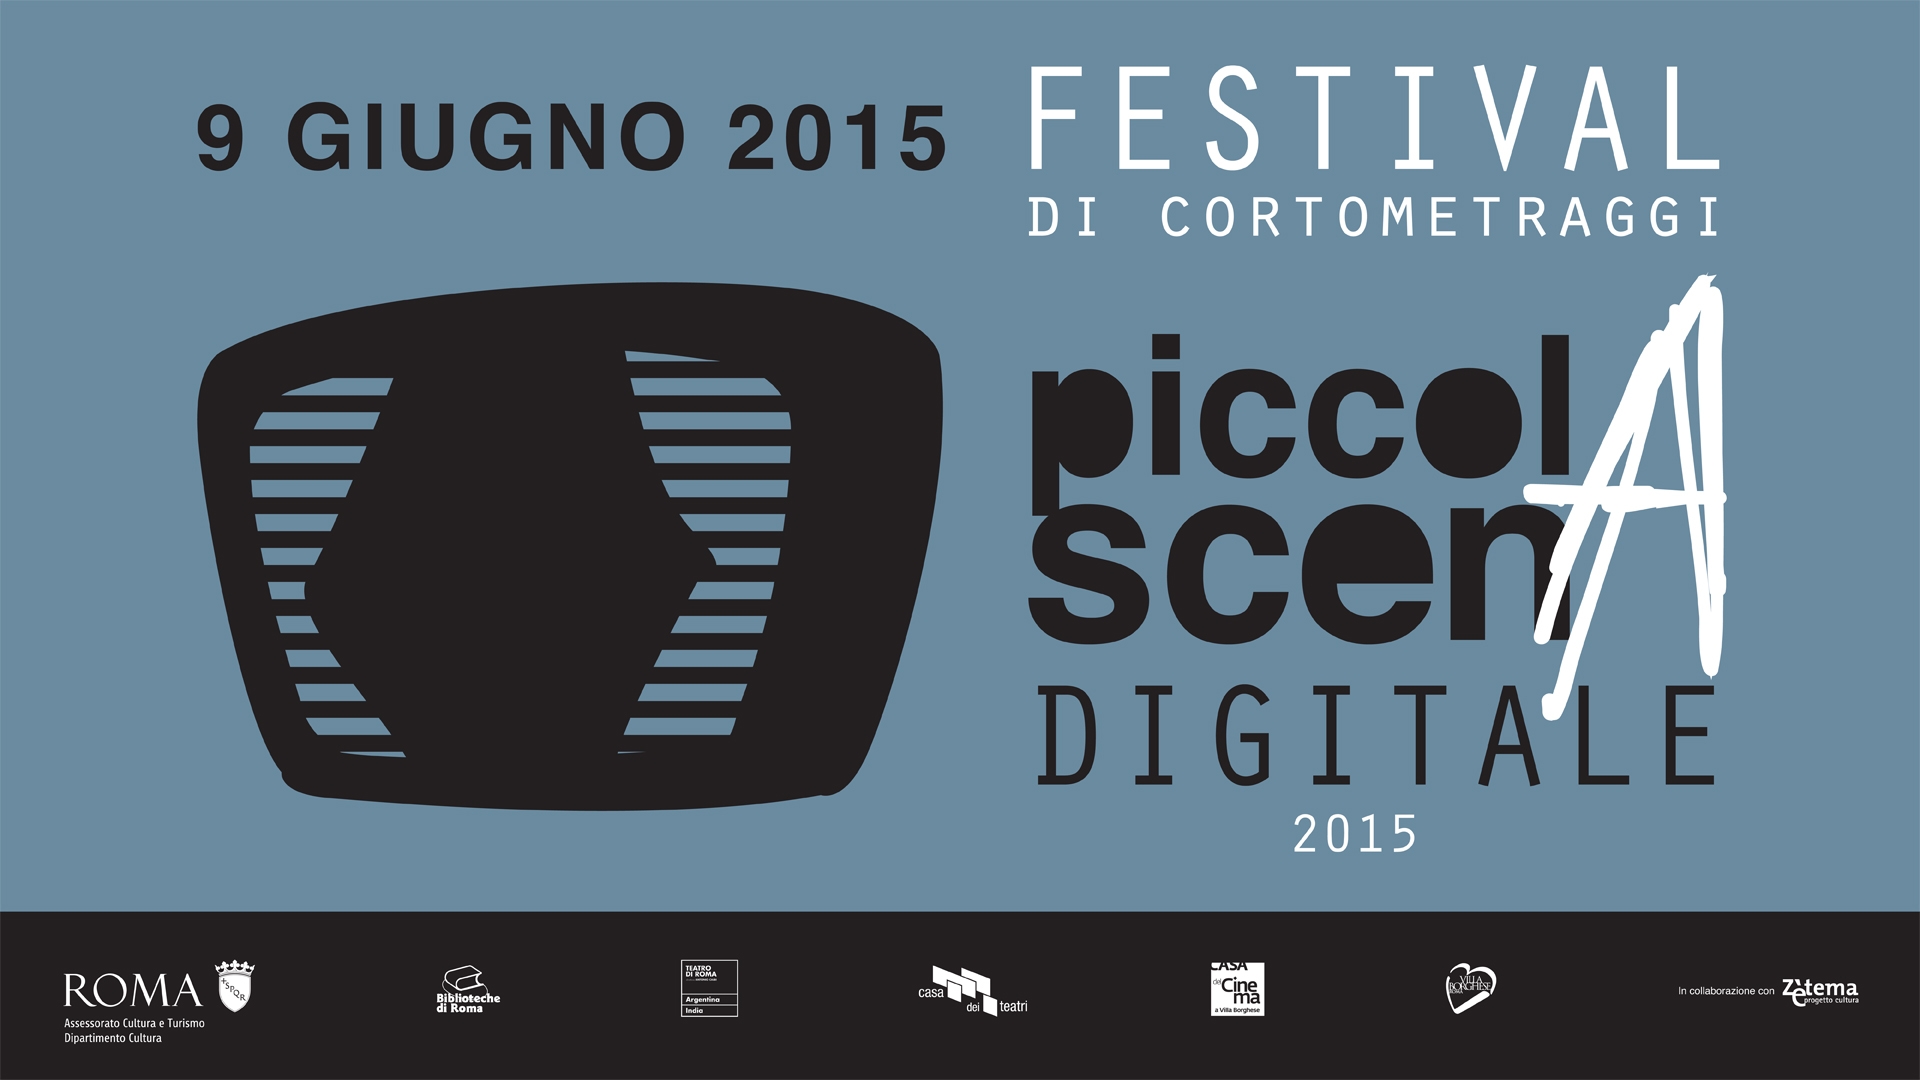 Festival Piccola Scena Digitale